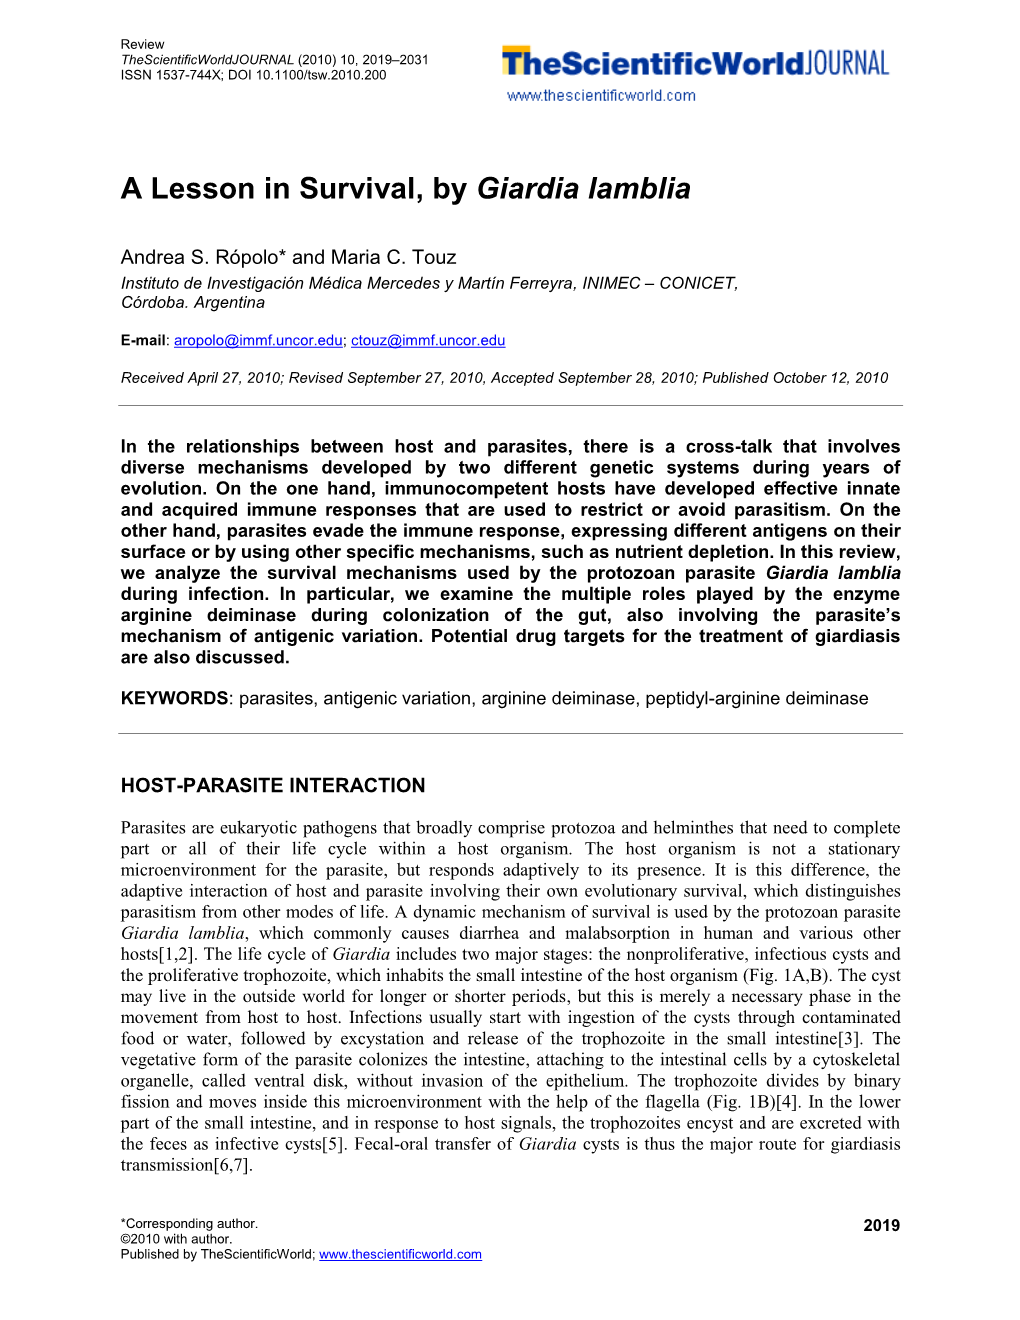 A Lesson in Survival, by Giardia Lamblia